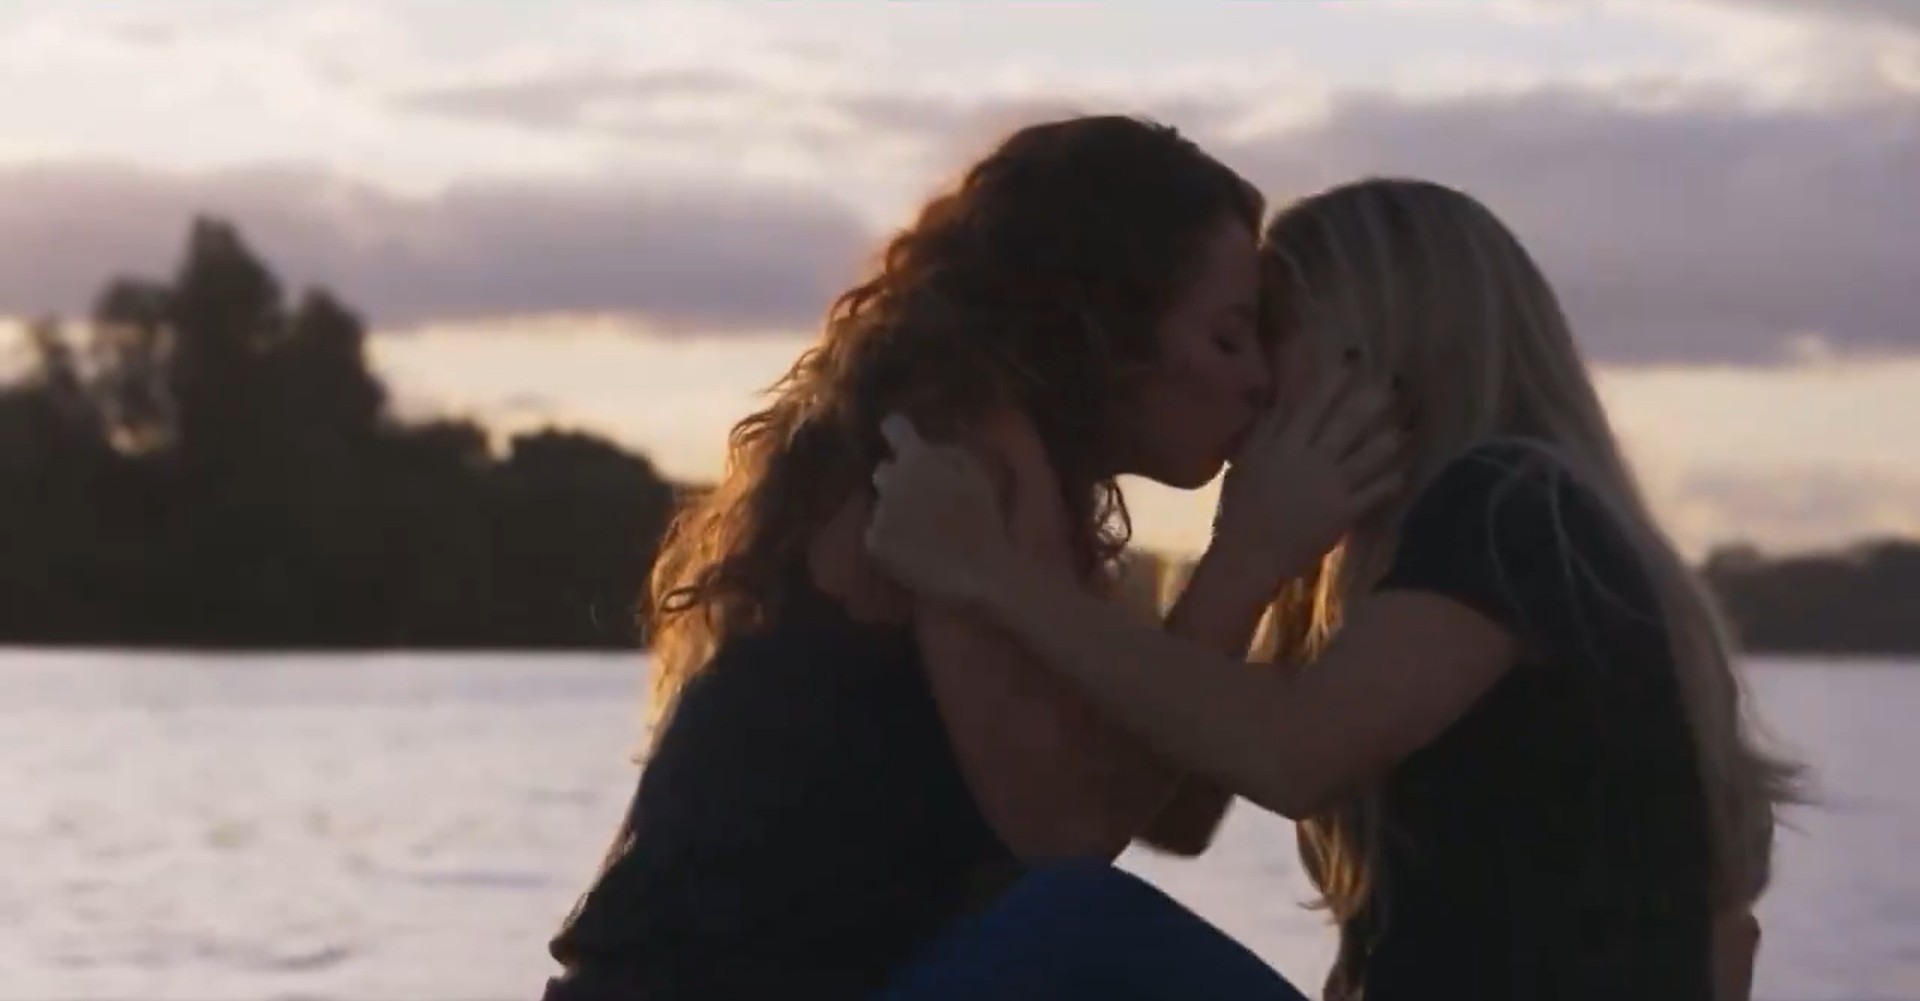 Beijo entre Paolla Oliveira e Nanda Costa em 'Justiça 2' viraliza nas redes; assista